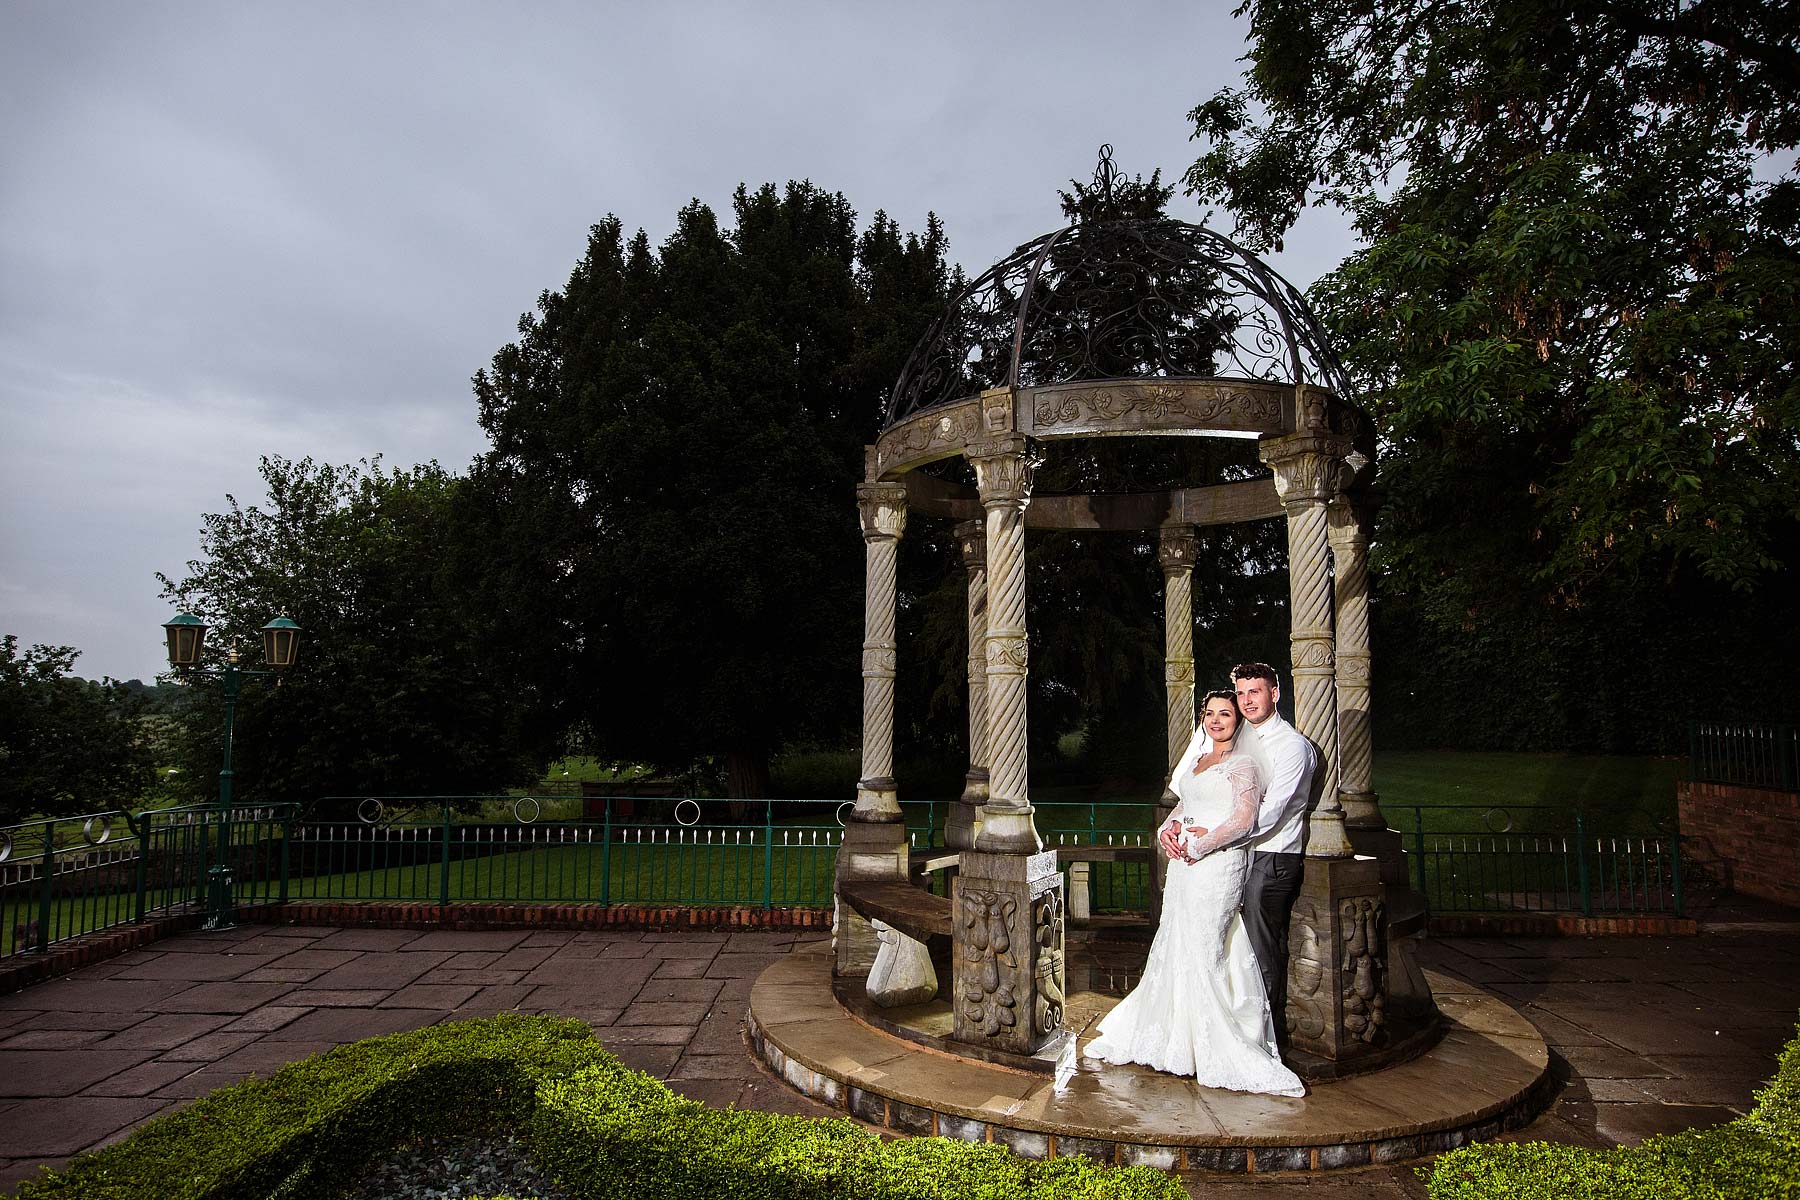 Creative documentary wedding photography story of Lyndsey + Howard's Weston Hall Wedding photographers Stuart James capturing the day